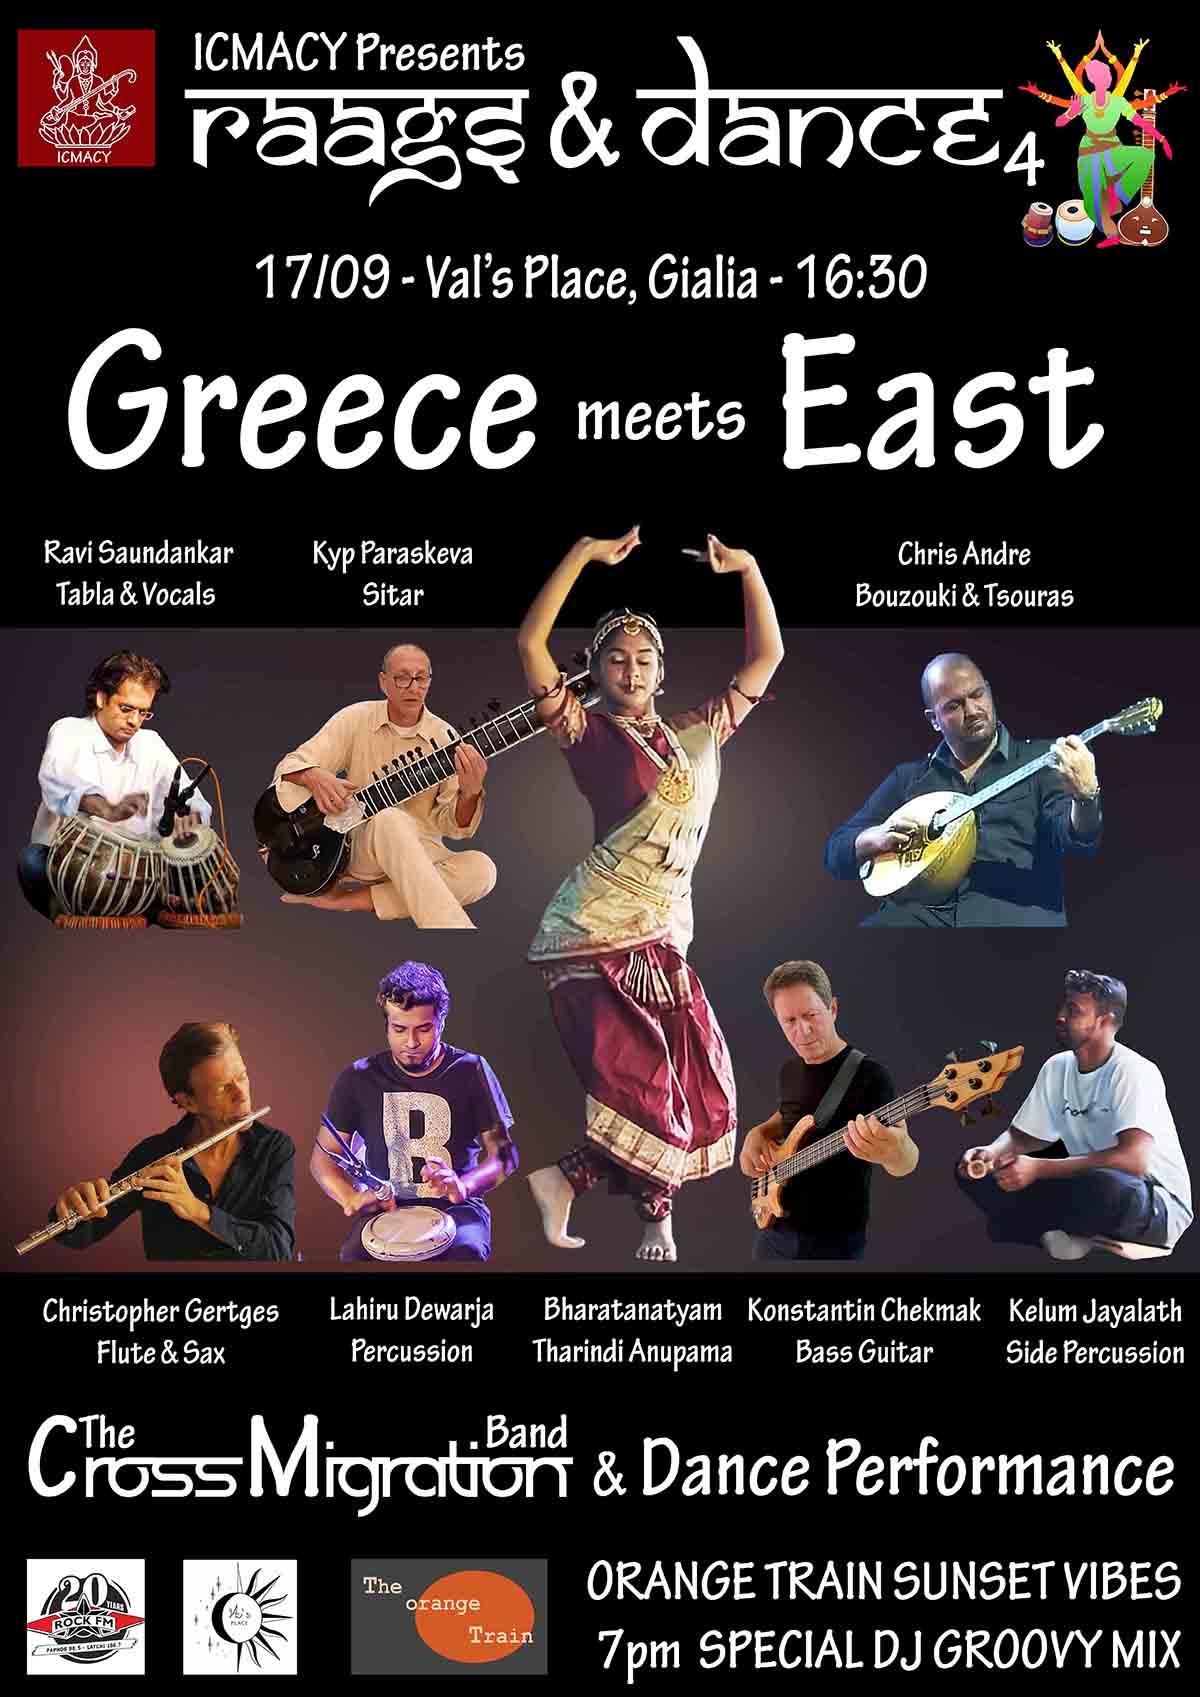 RAAGS & DANCE4 – Greece meets East